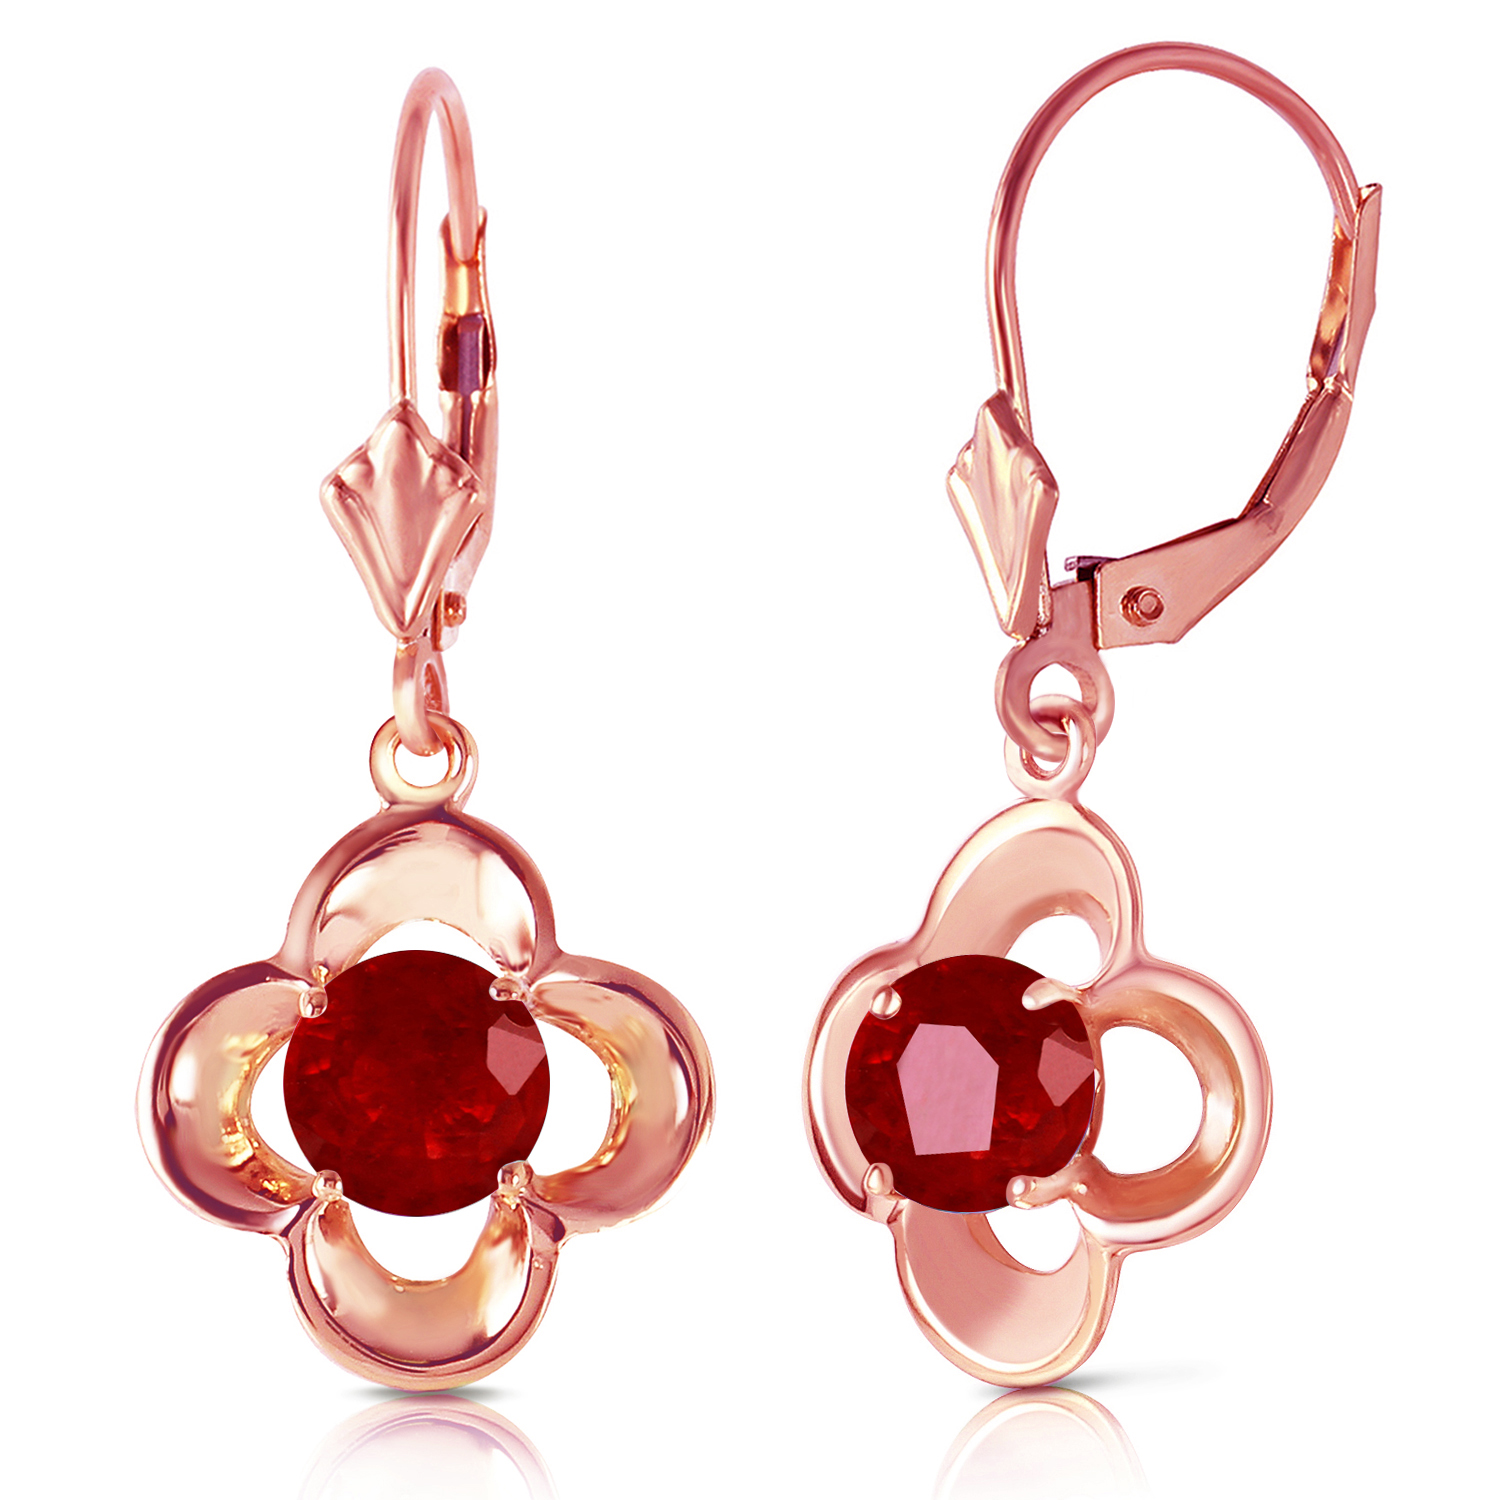 1.1 Carat 14K Solid Rose Gold Ruby Bloom Earrings | eBay